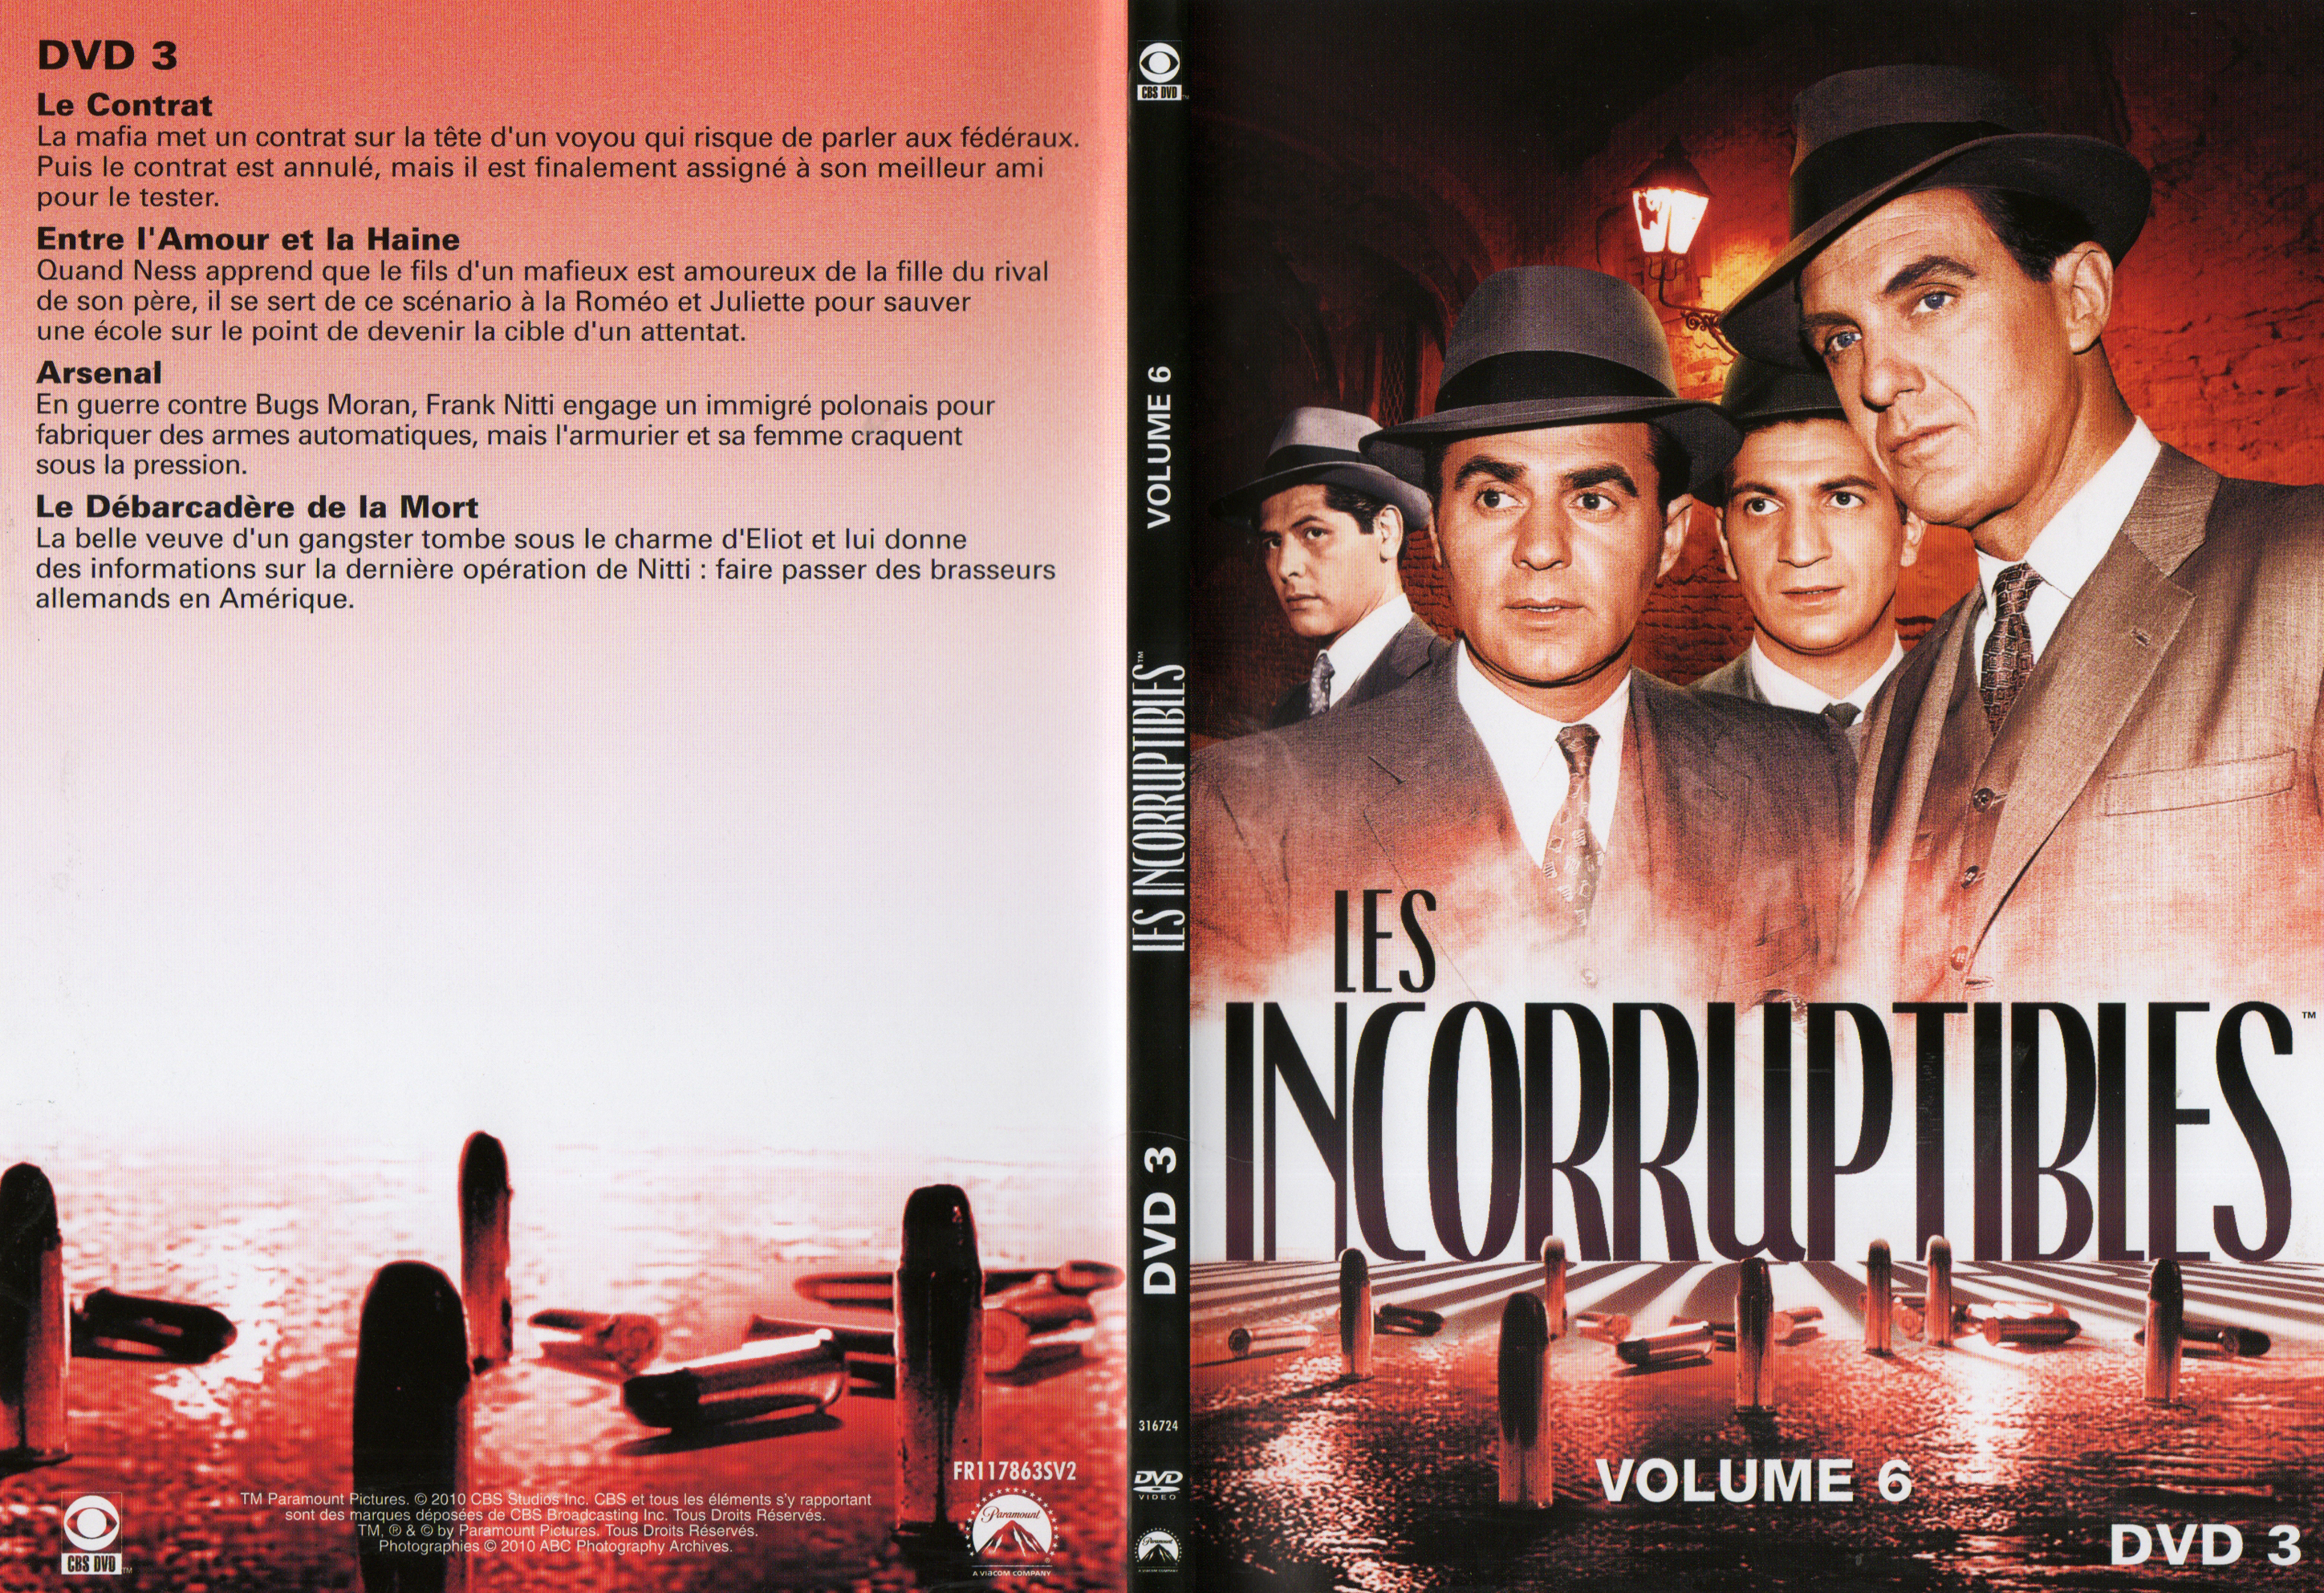 Jaquette DVD Les incorruptibles vol 06 DVD 2